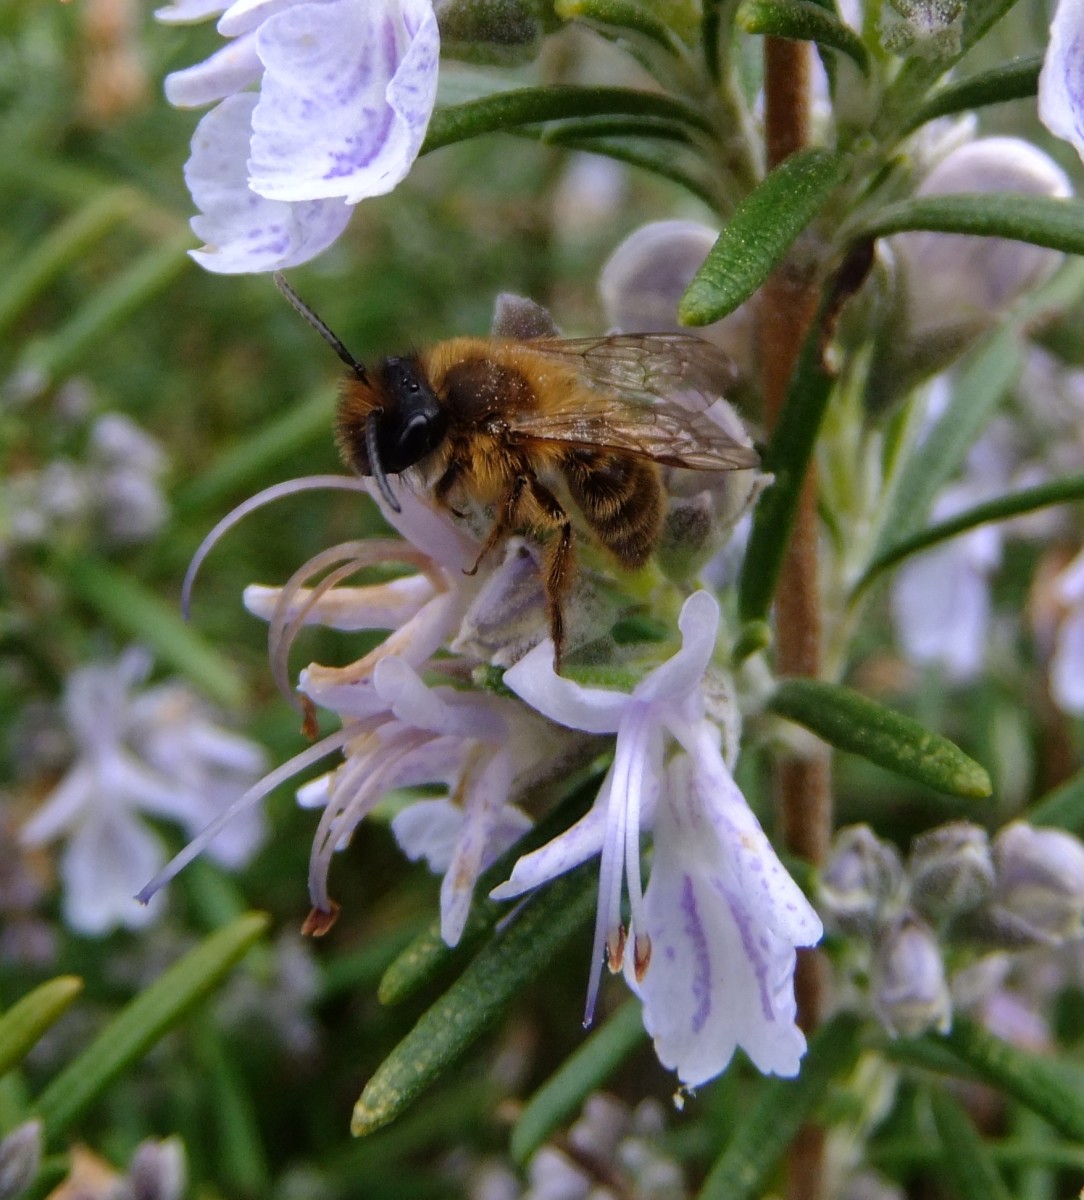 Rosemary flowers with honeybee